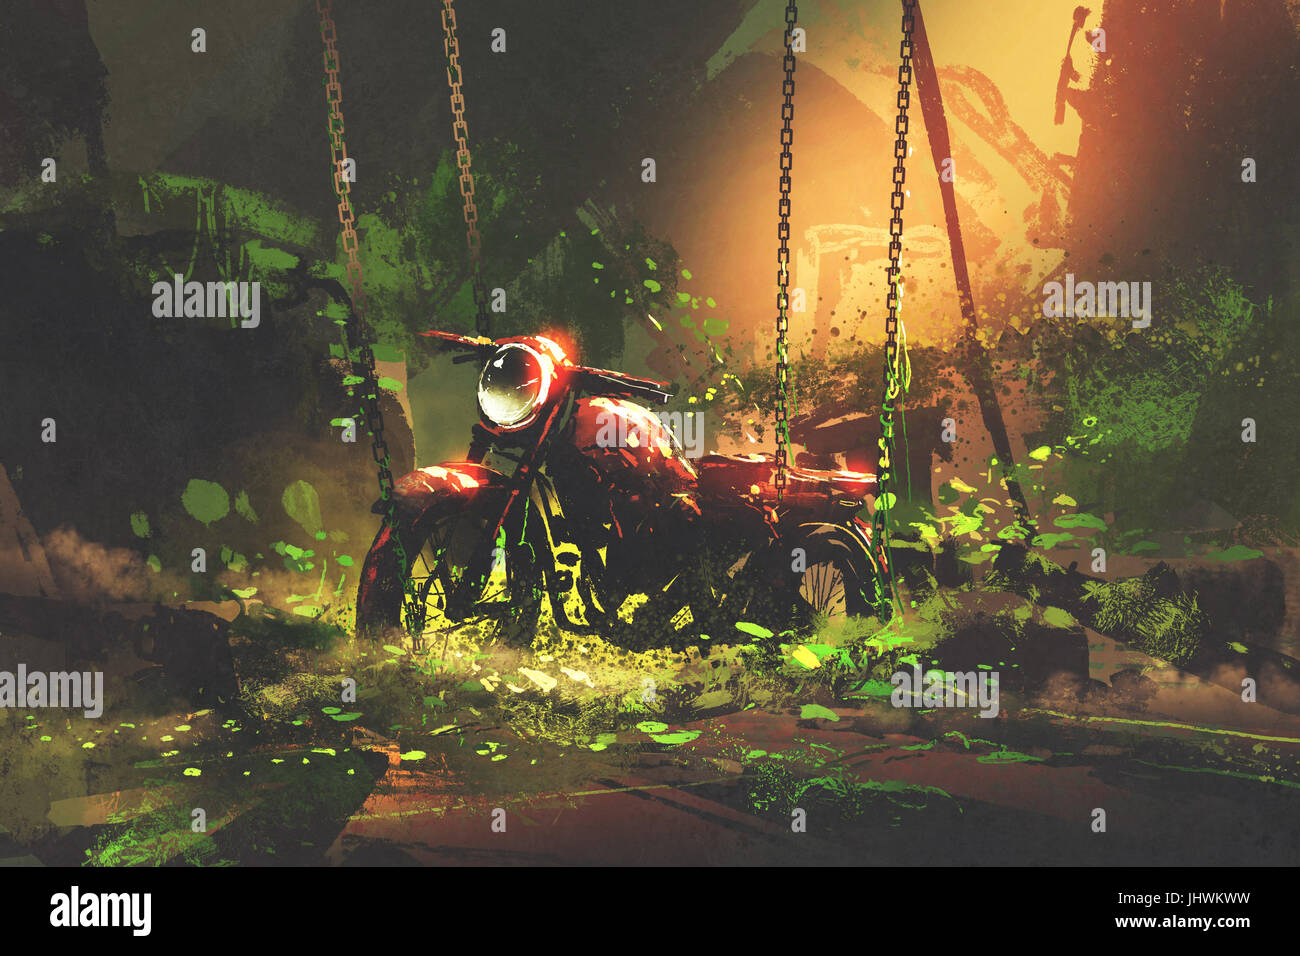 abandoned rusty motorbike in overgrown vegetation, digital art style, illustration painting Stock Photo